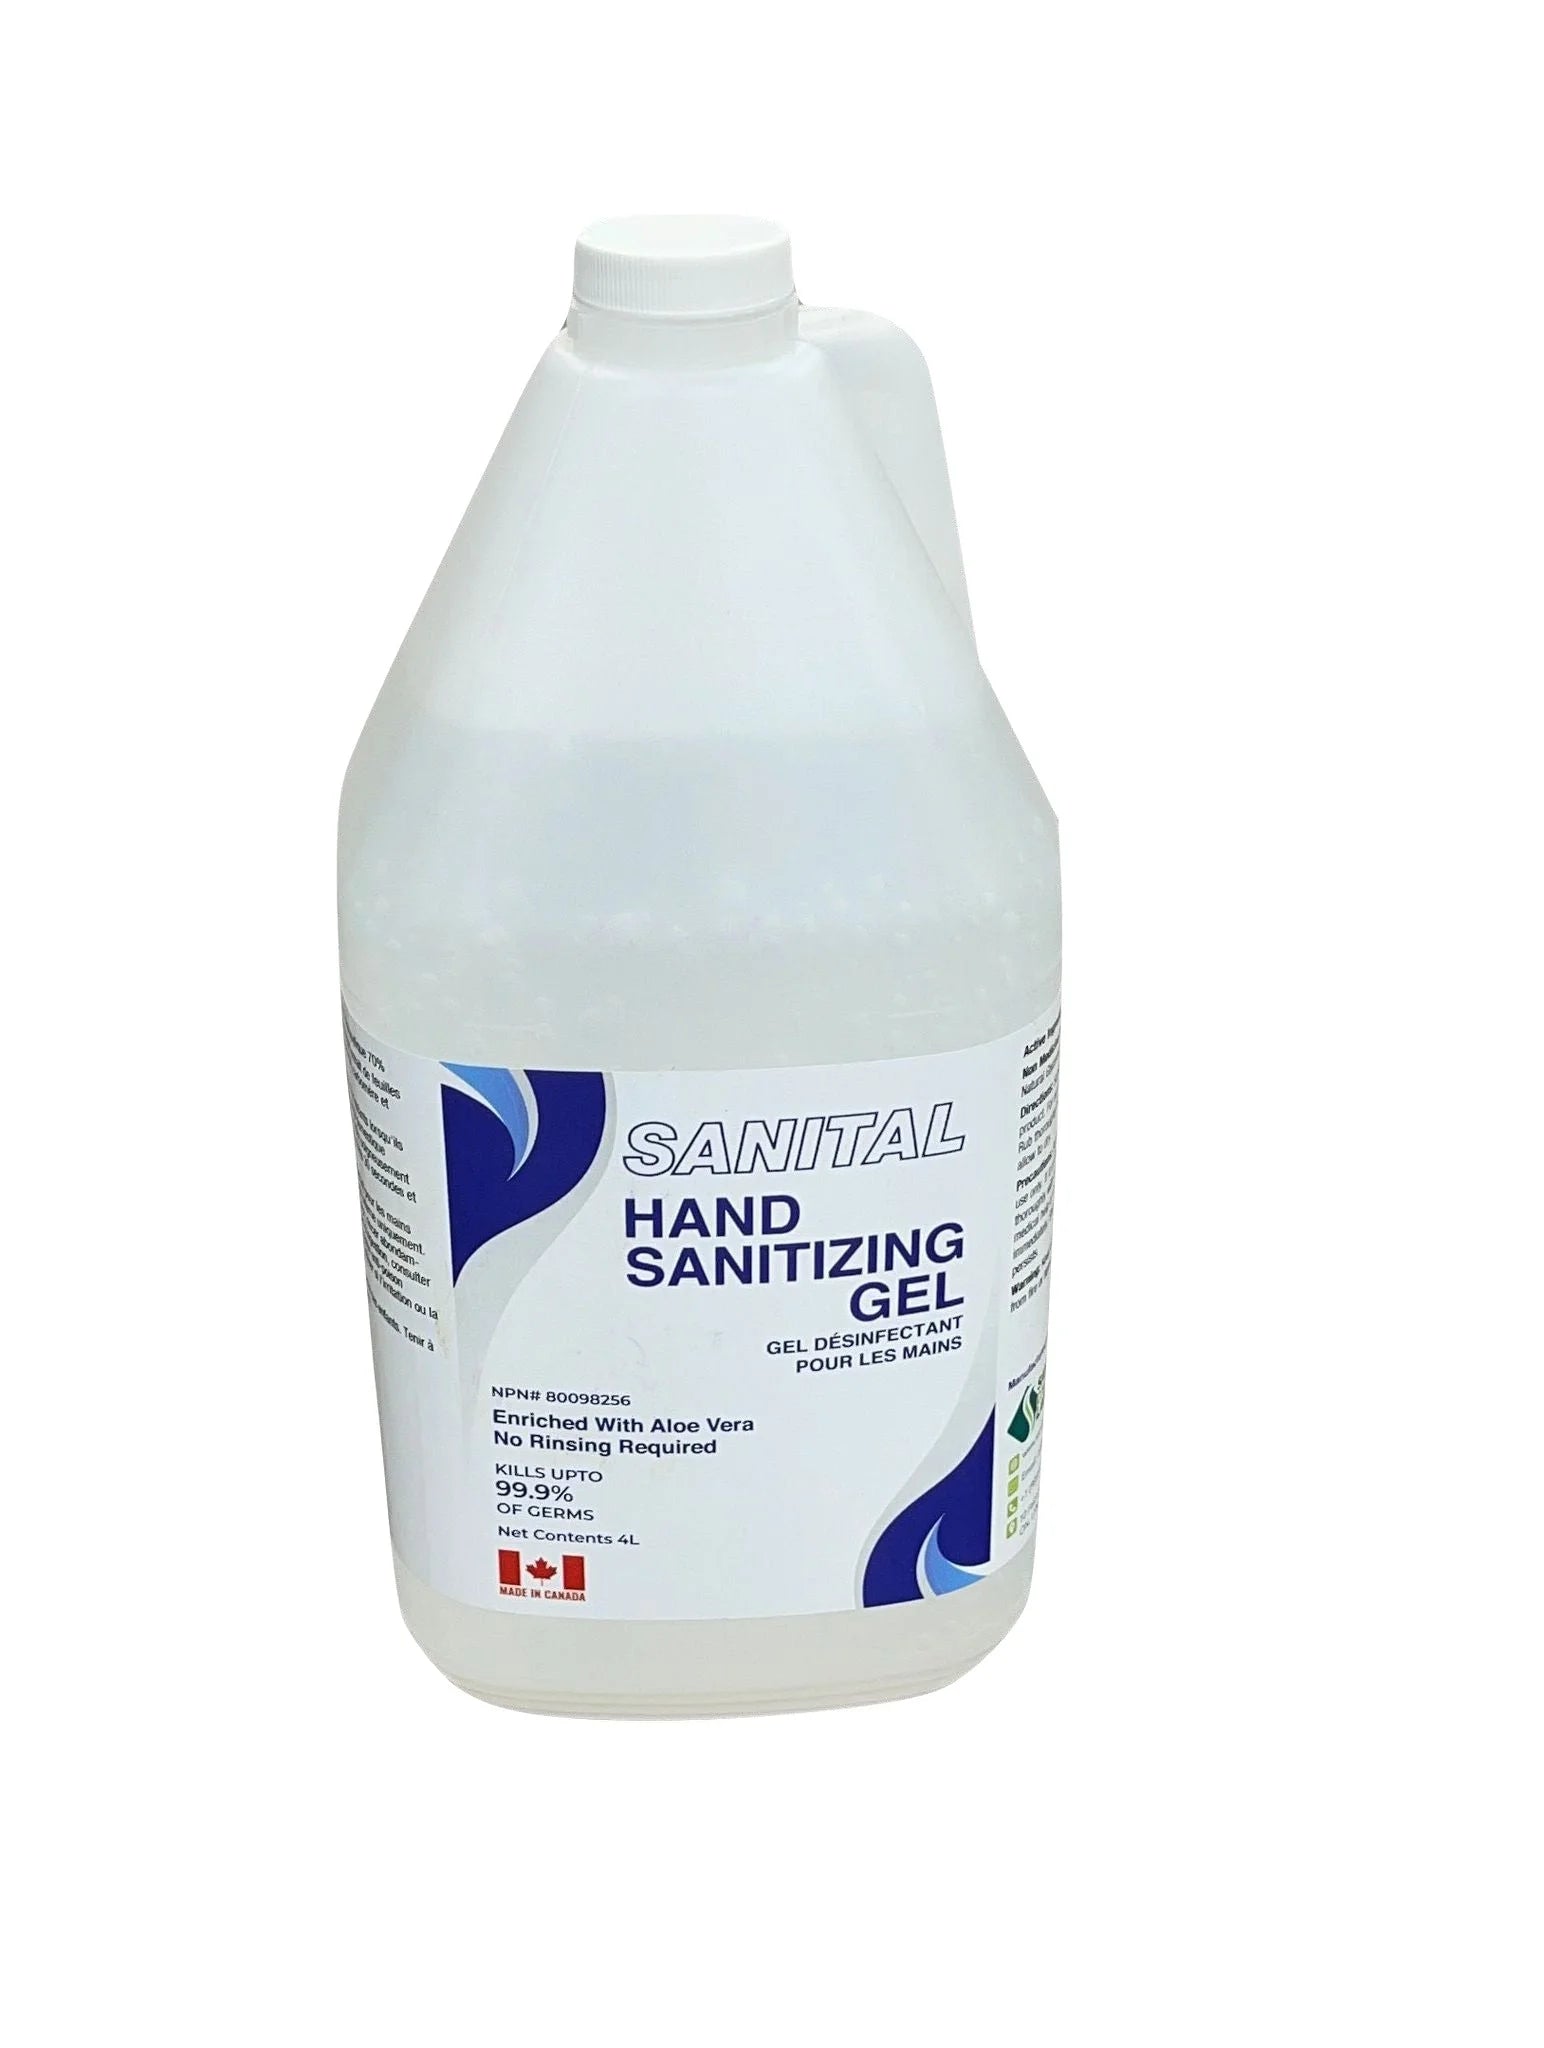 SANITAL Hand Sanitizing Gel 1Gal Classique Nails Beauty Supply Inc.